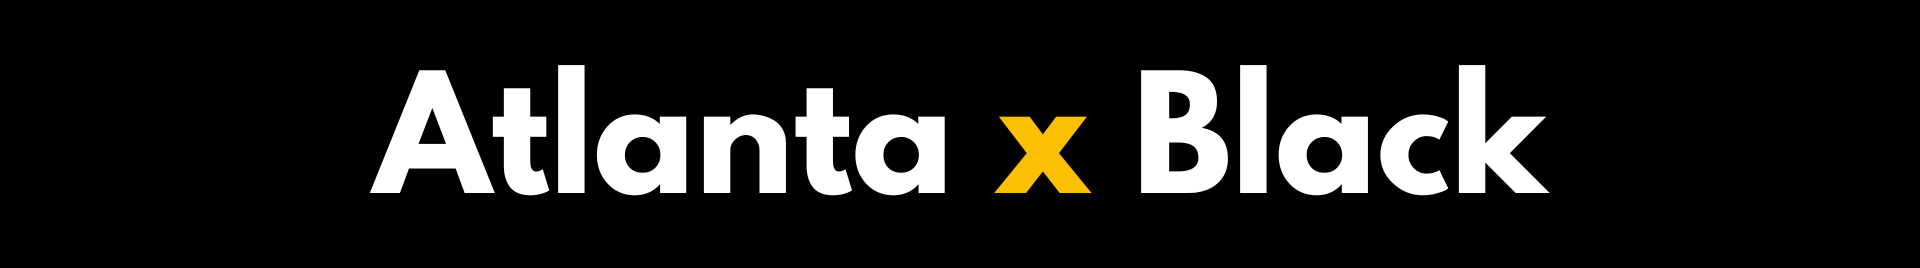 Atlanta (x)Black logo